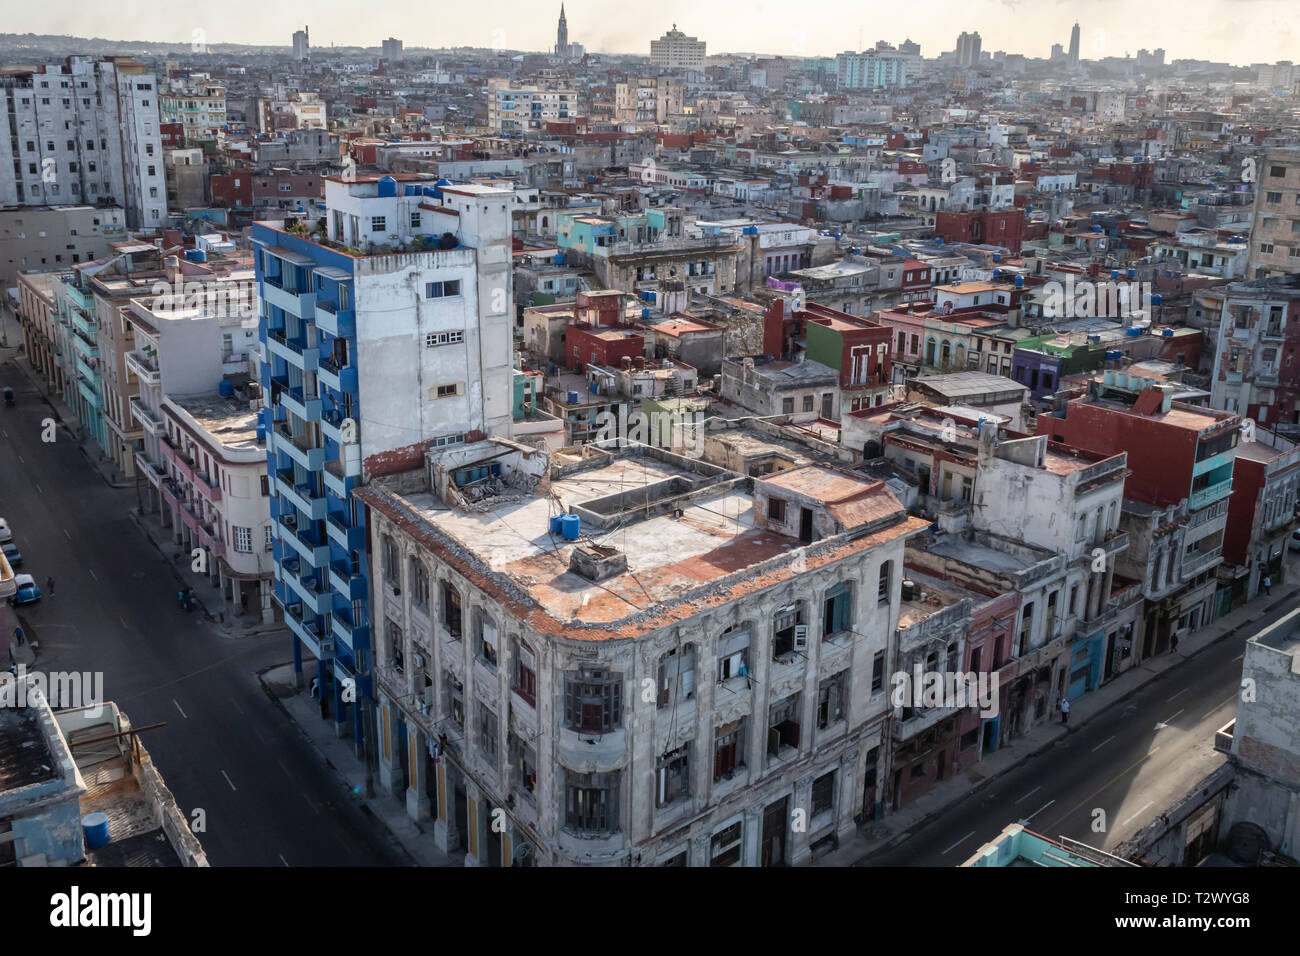 Historic city of Havana, UNESCO world heritage site, over the rooftops Stock Photo